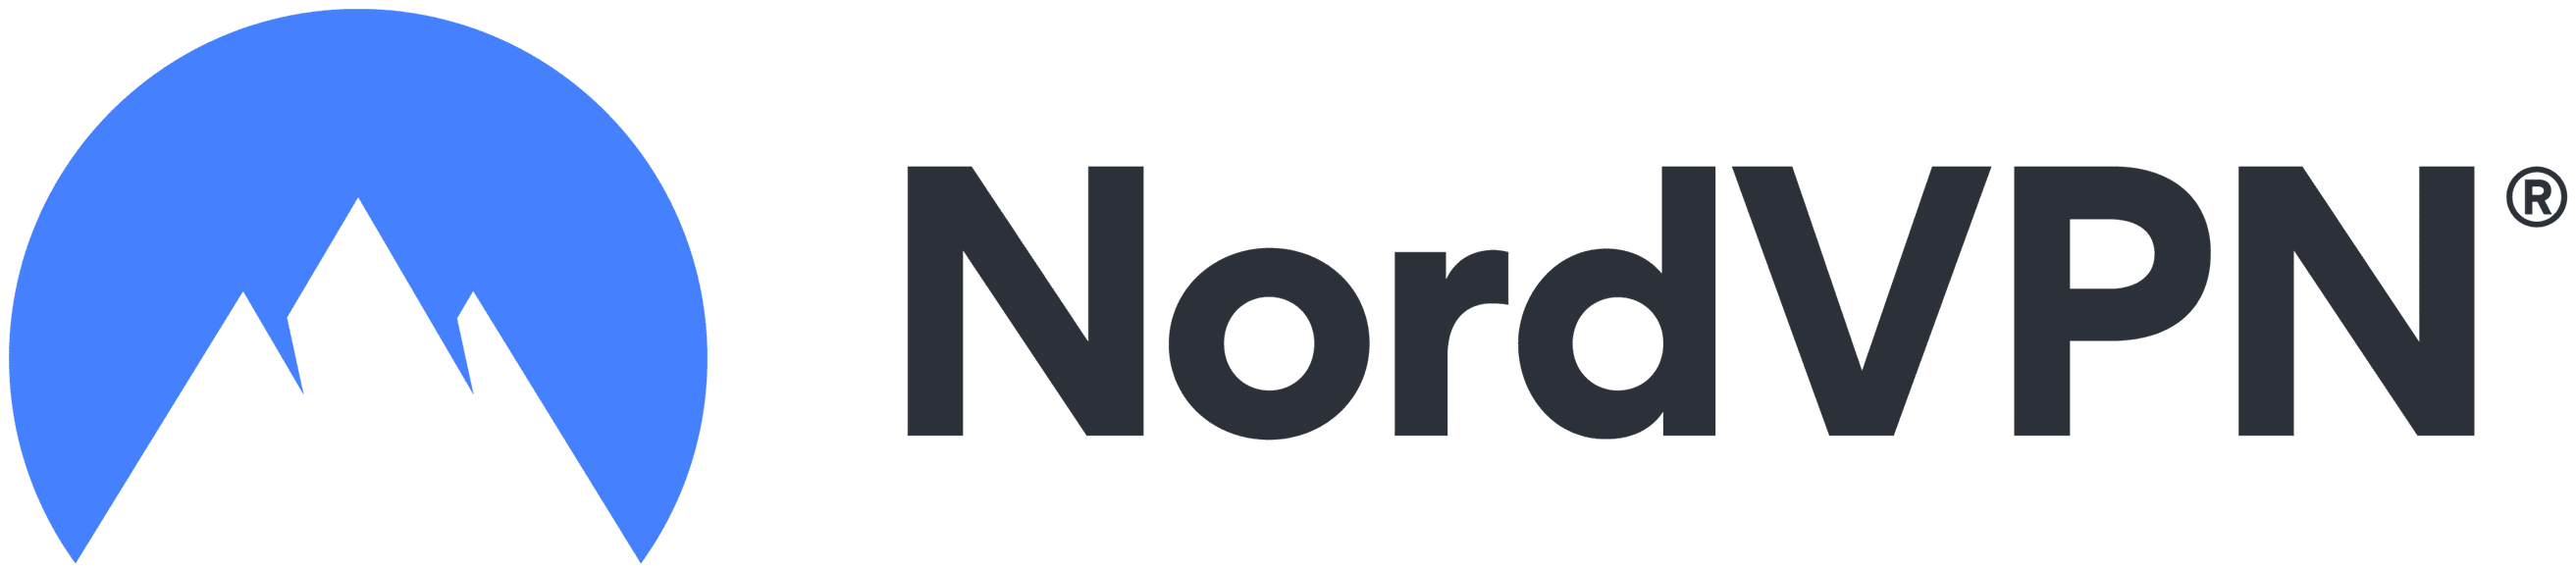 nordvpn logo horizontal original